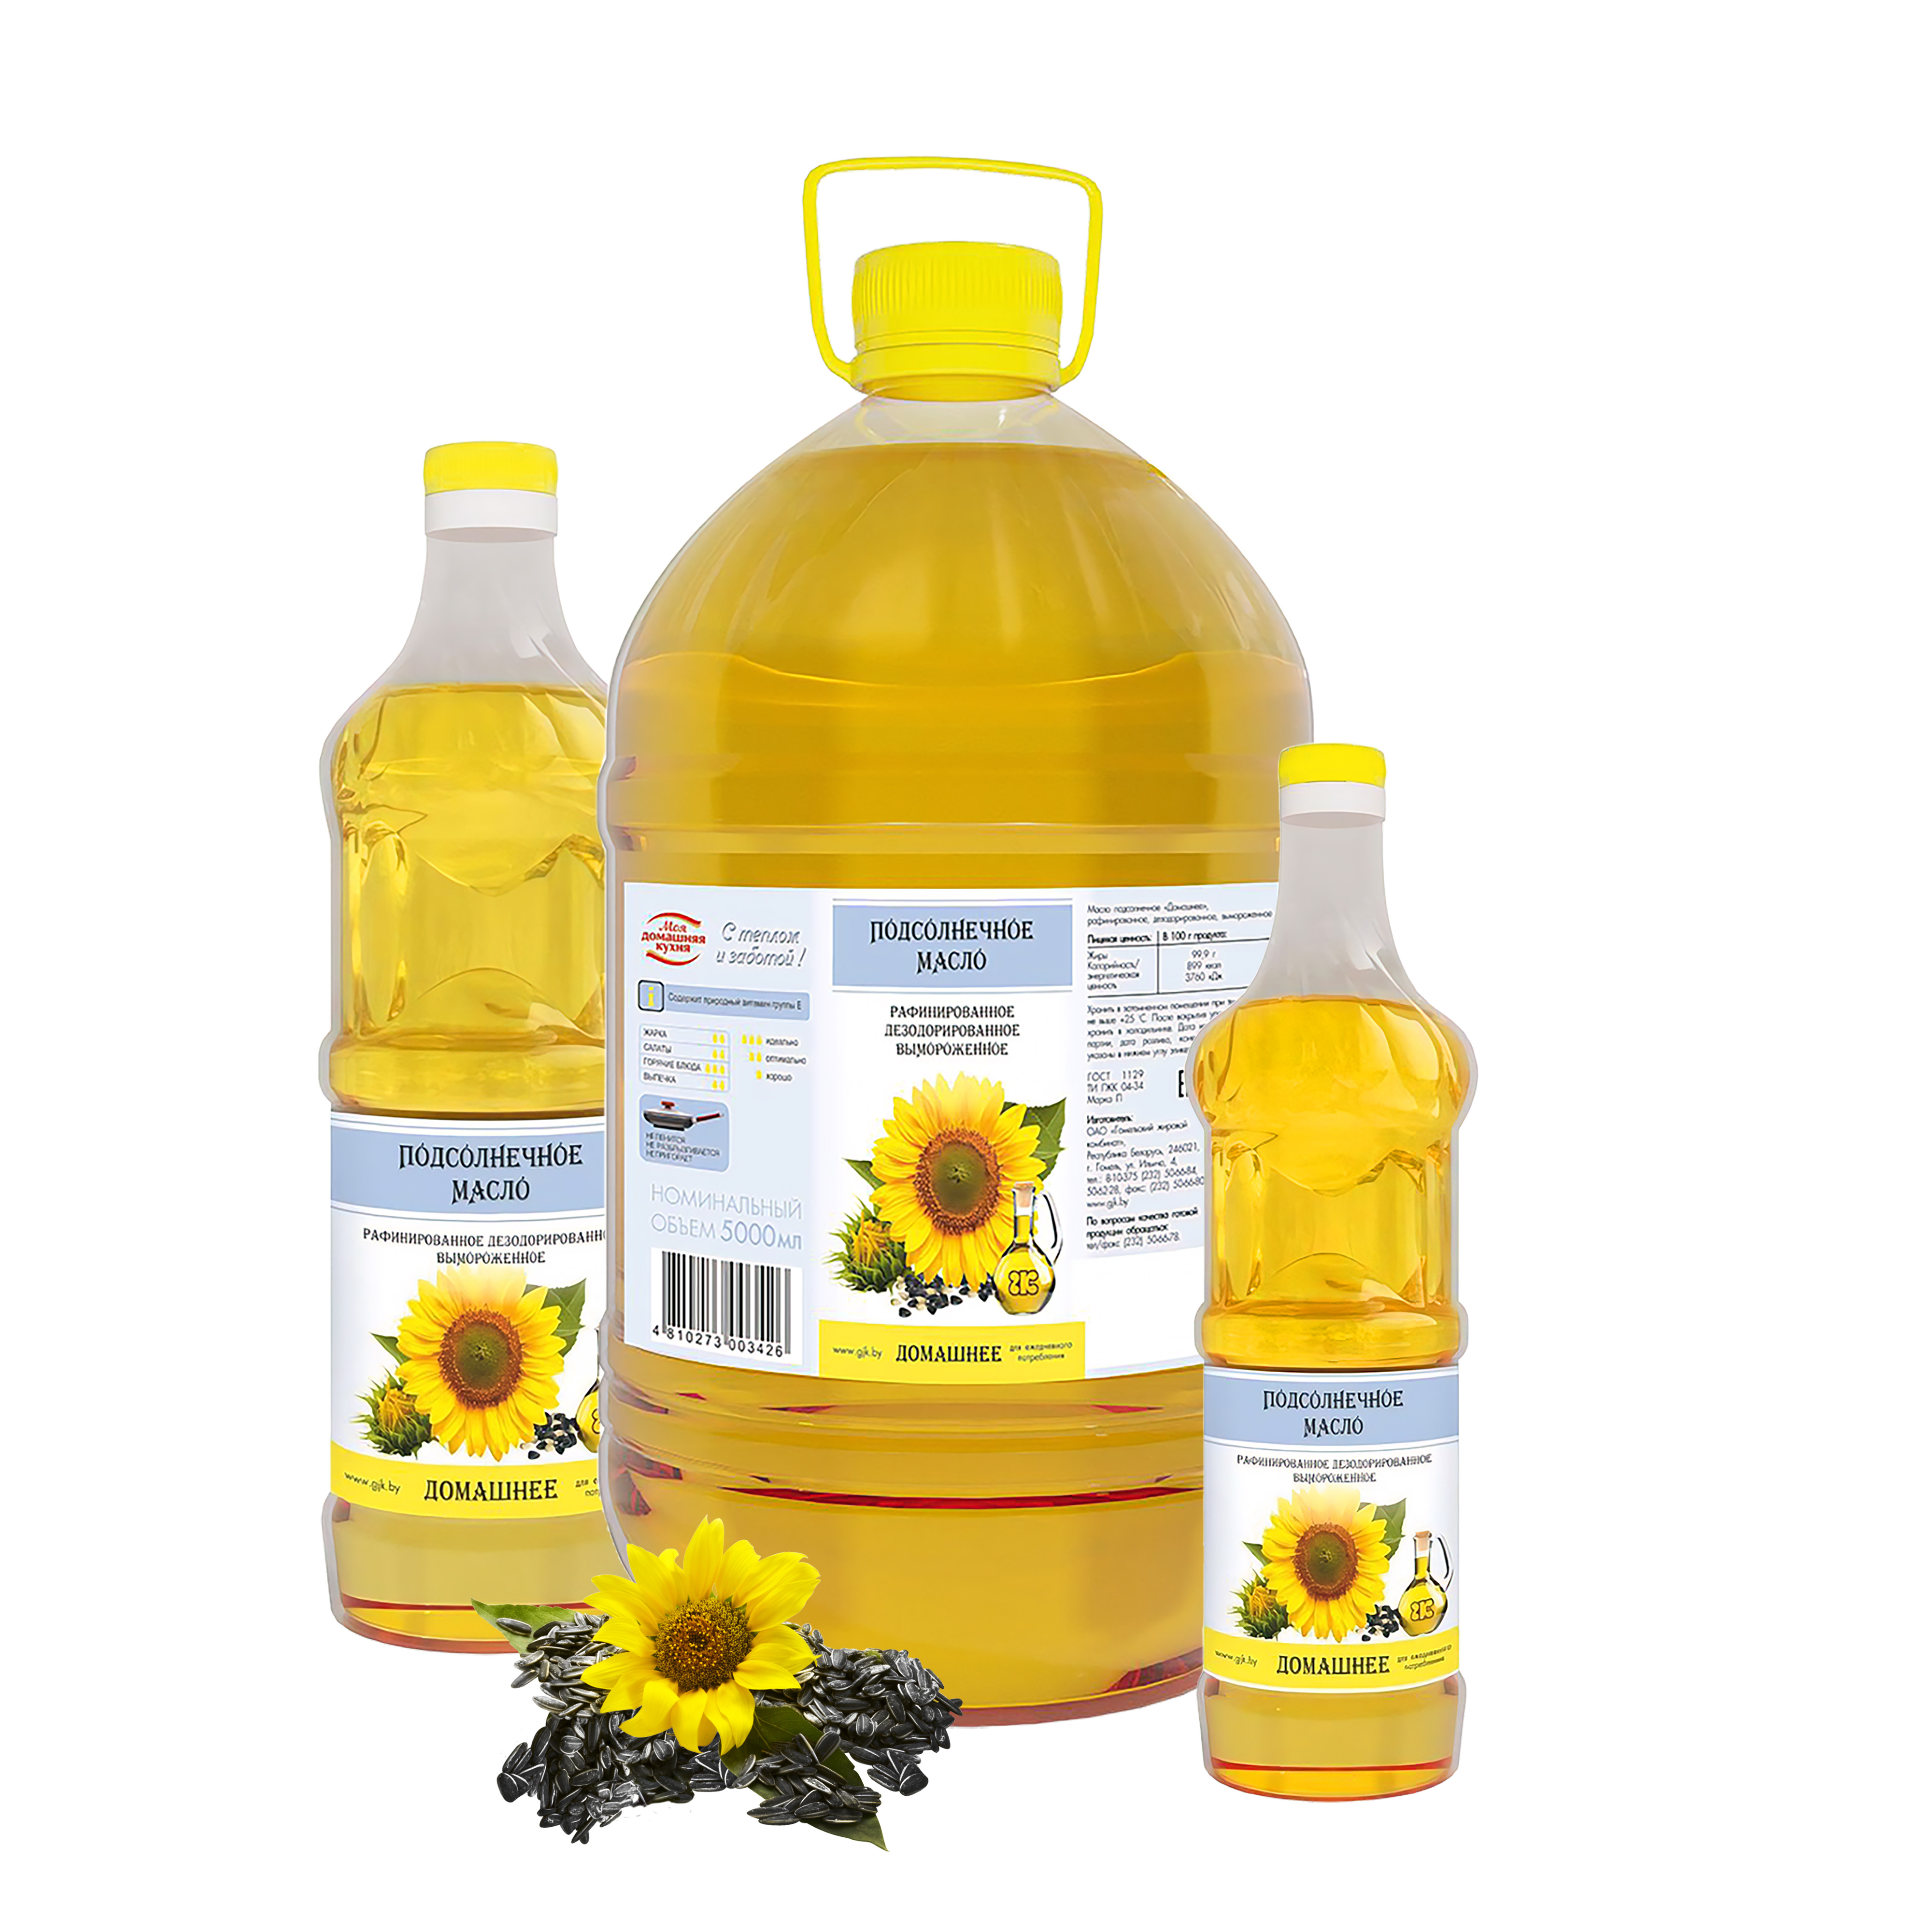 Sunflower oil Homemade wholesale supplies